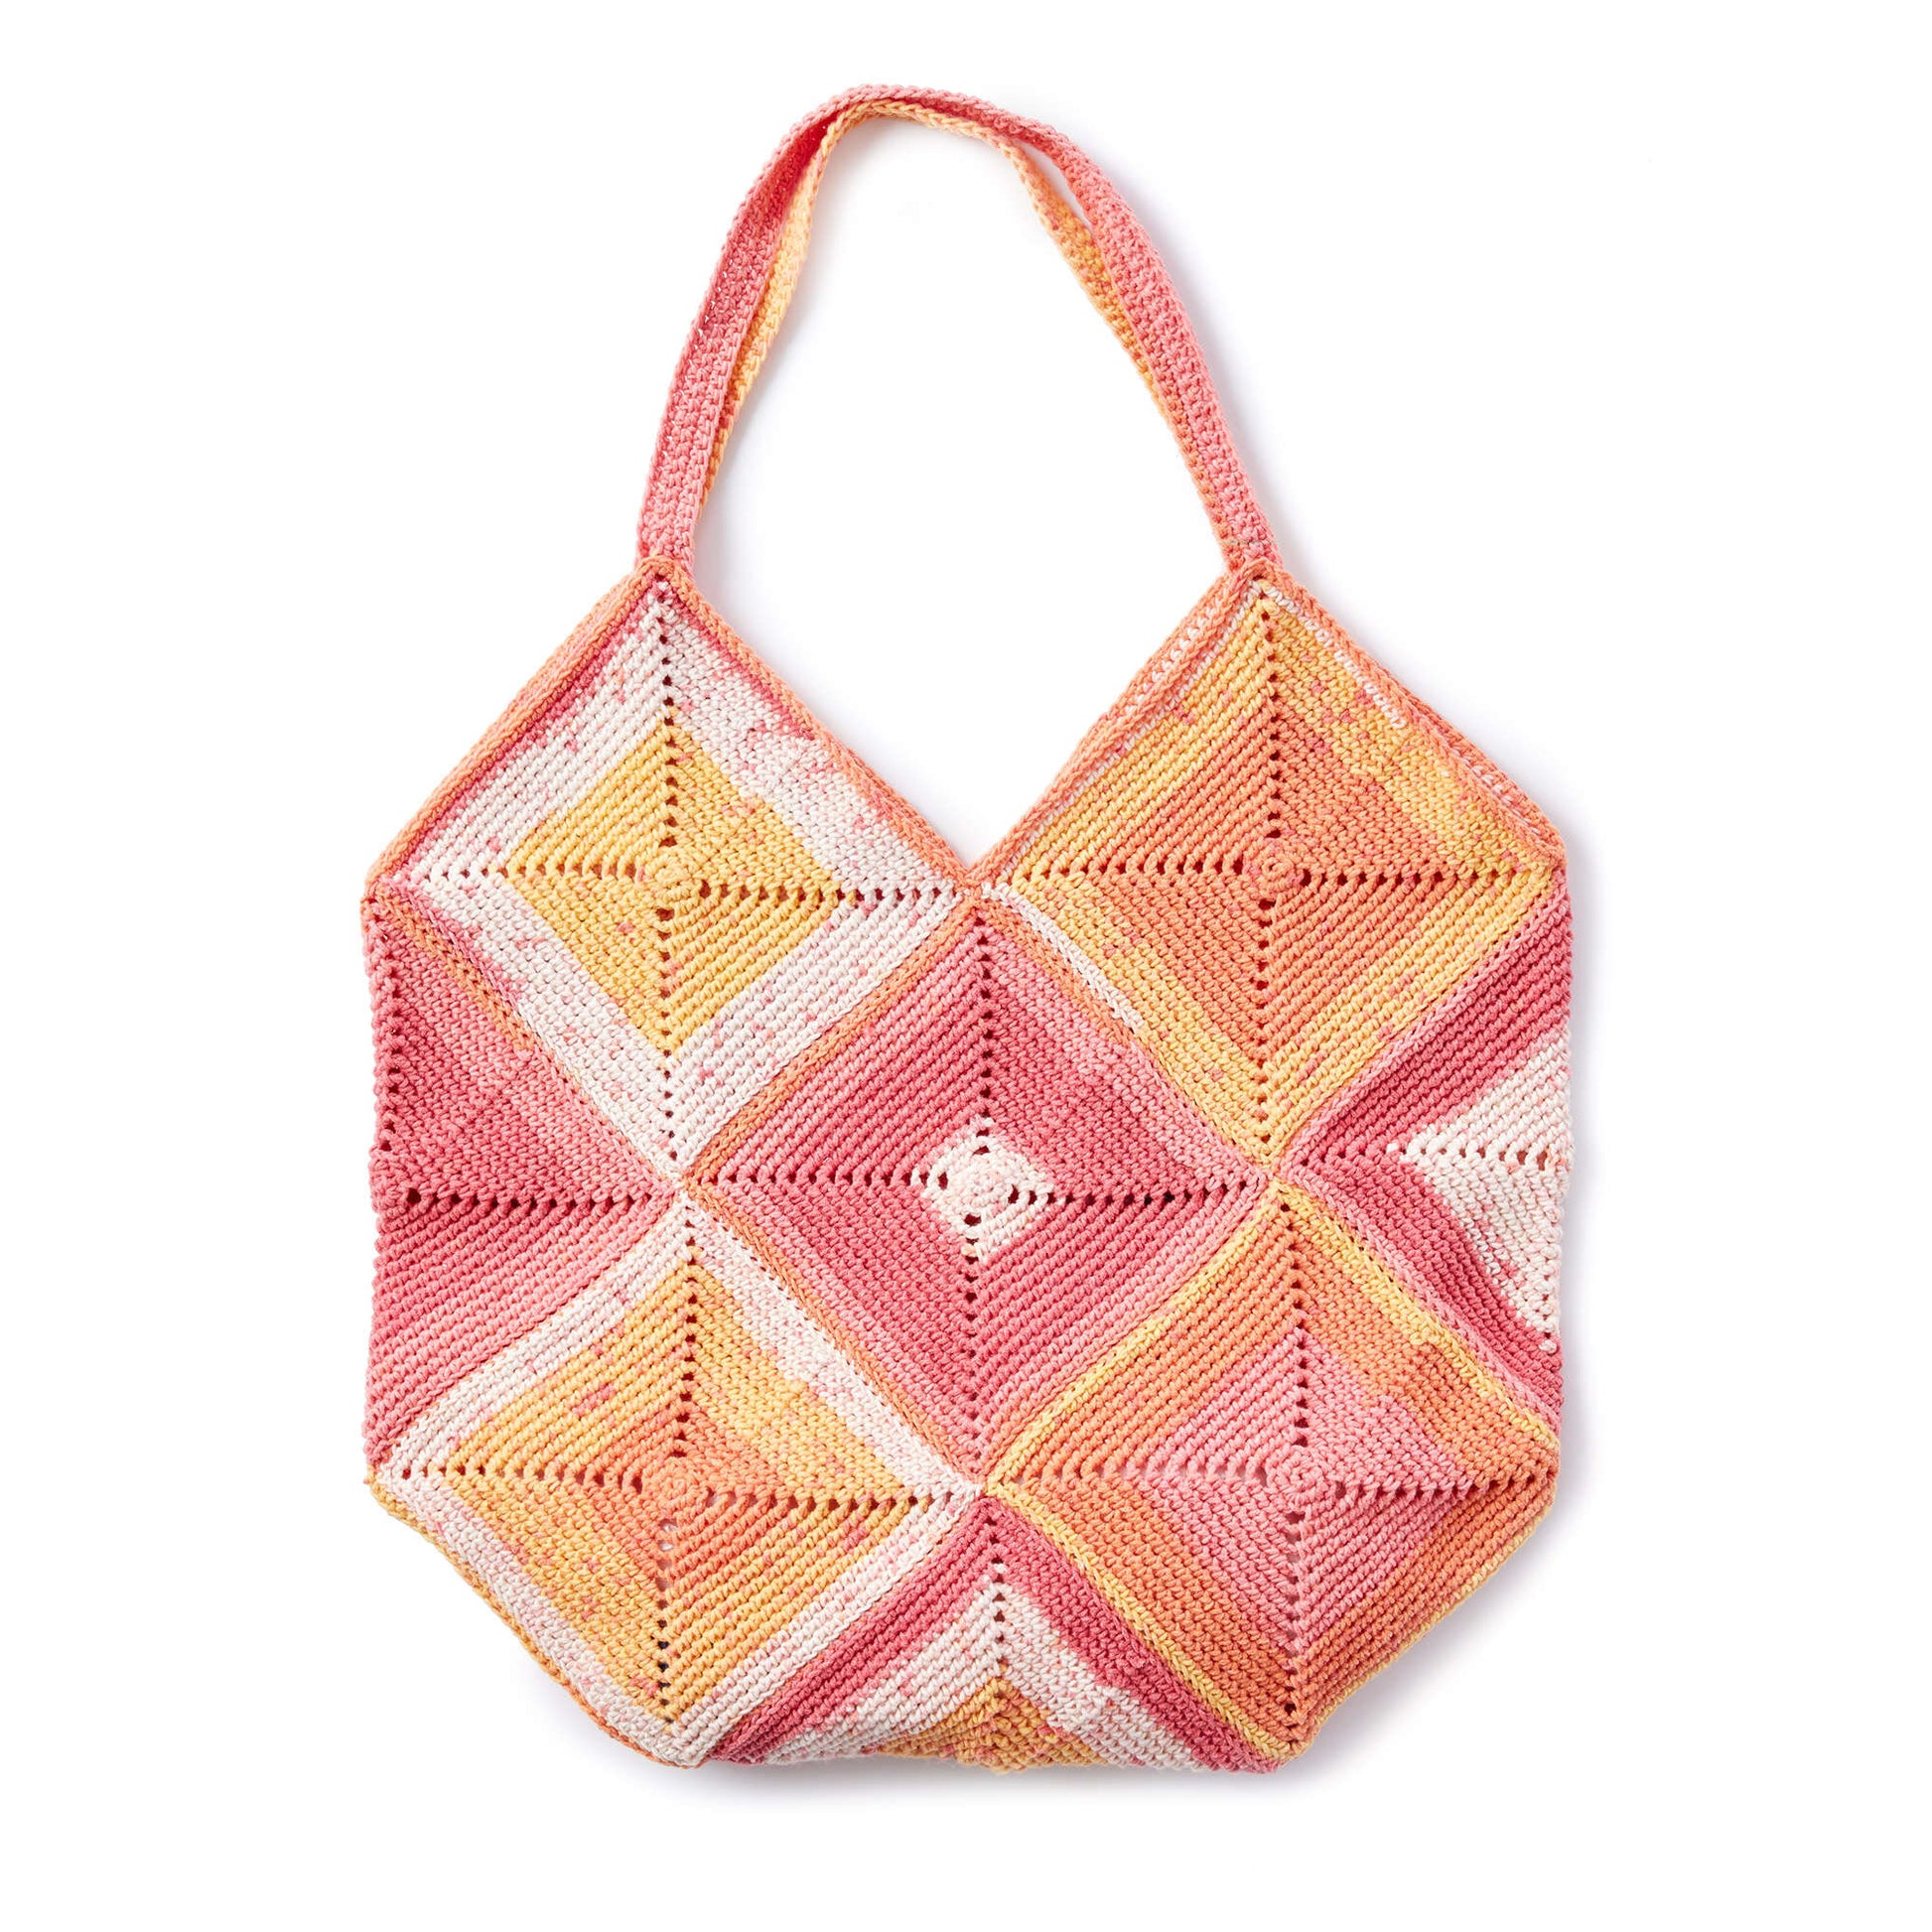 Free Caron Granny Summer Bag Crochet Pattern